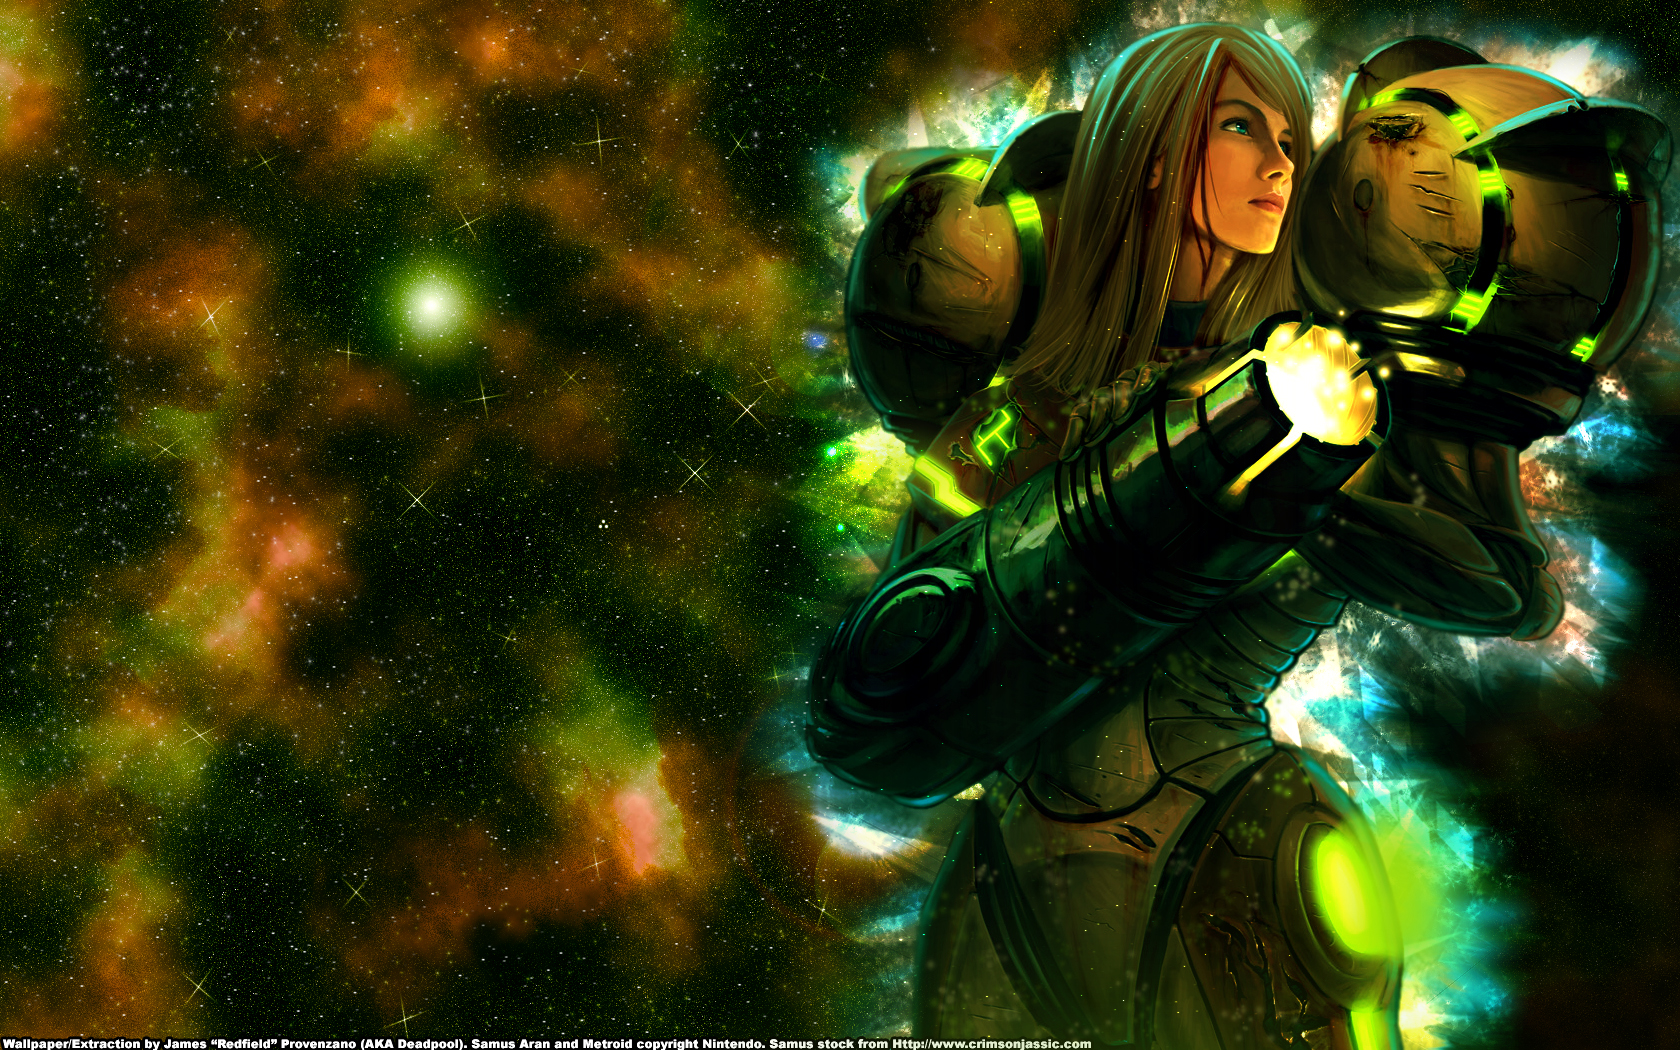 Video Game Metroid HD Wallpaper | Background Image